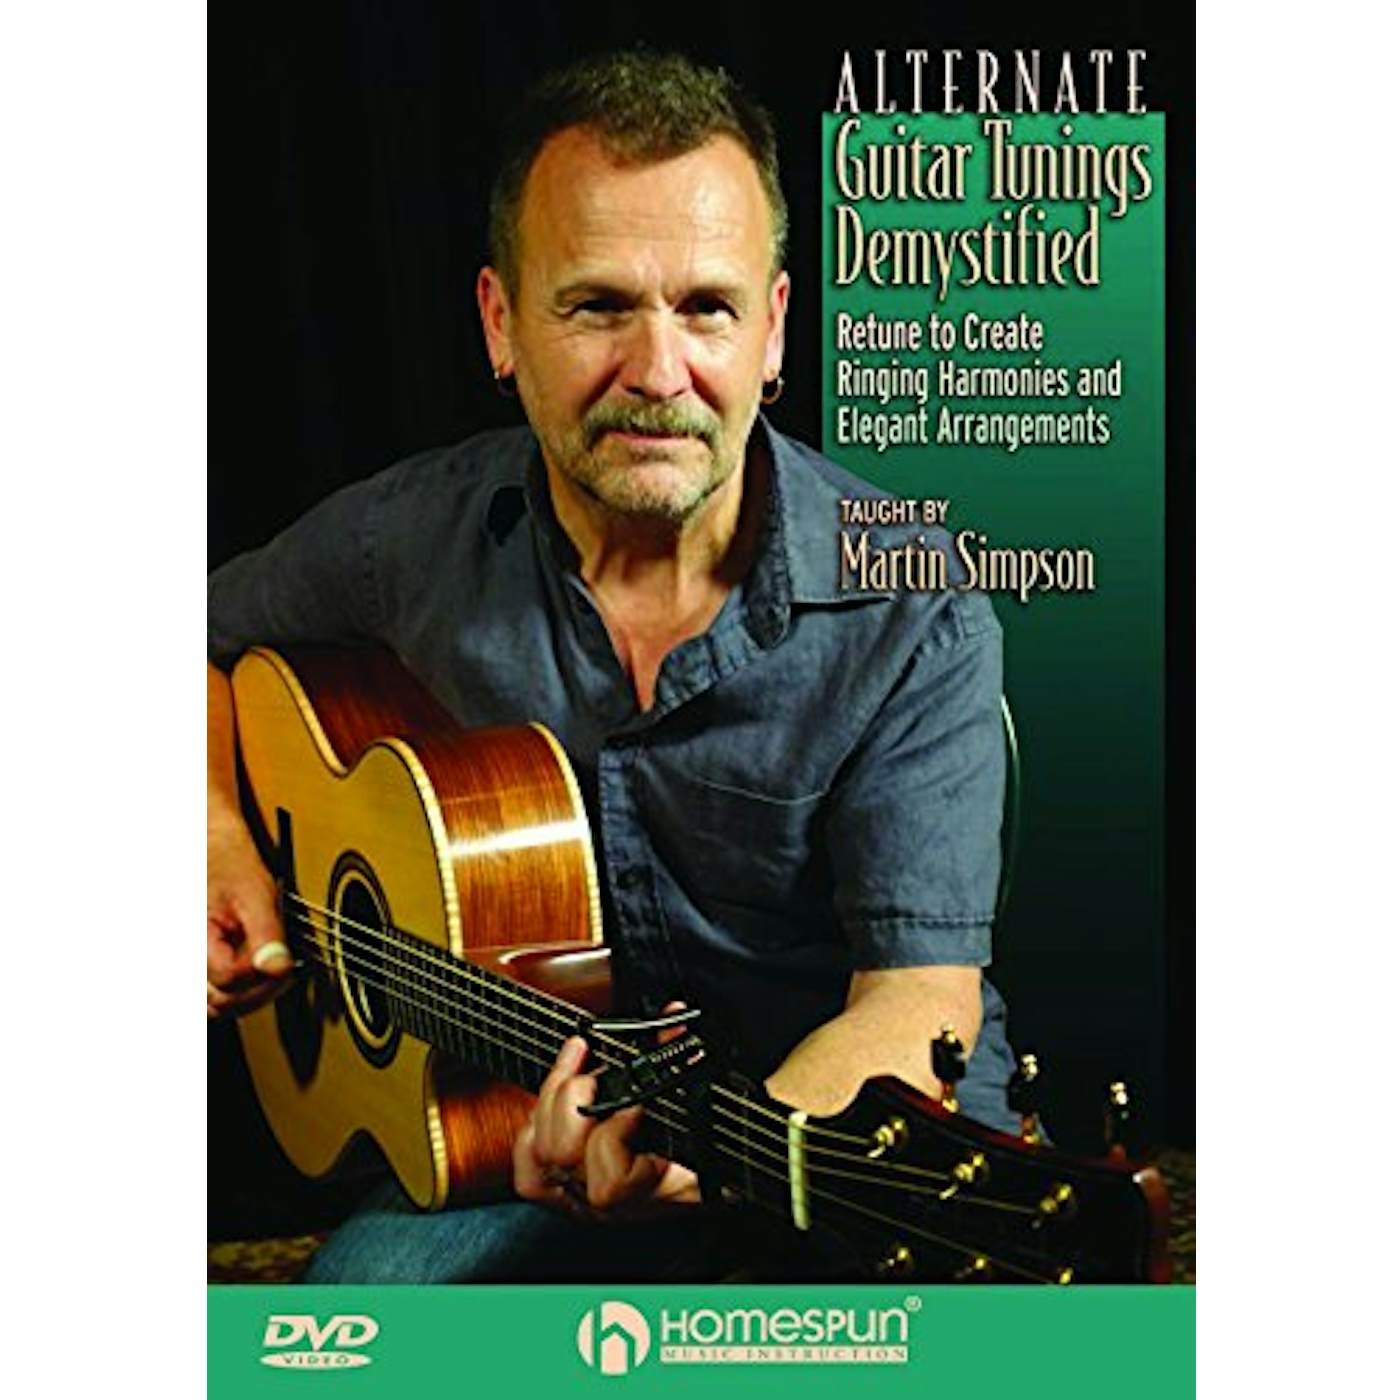 Martin Simpson ALTERNATIVE GUITAR TUNINGS DEMYSTIFIED DVD